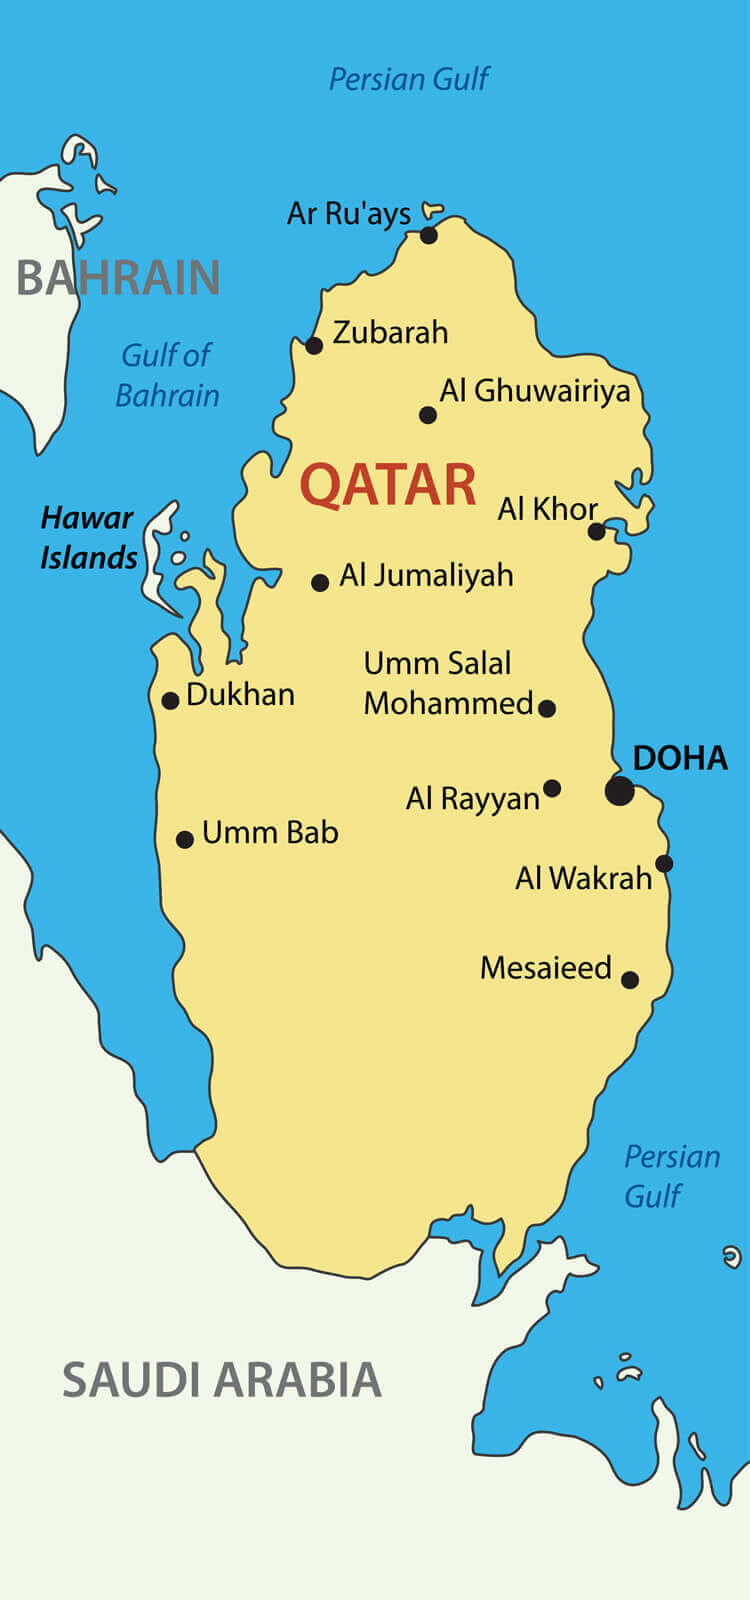 Katar Buyuk Sehirleri ve Doha Haritasi